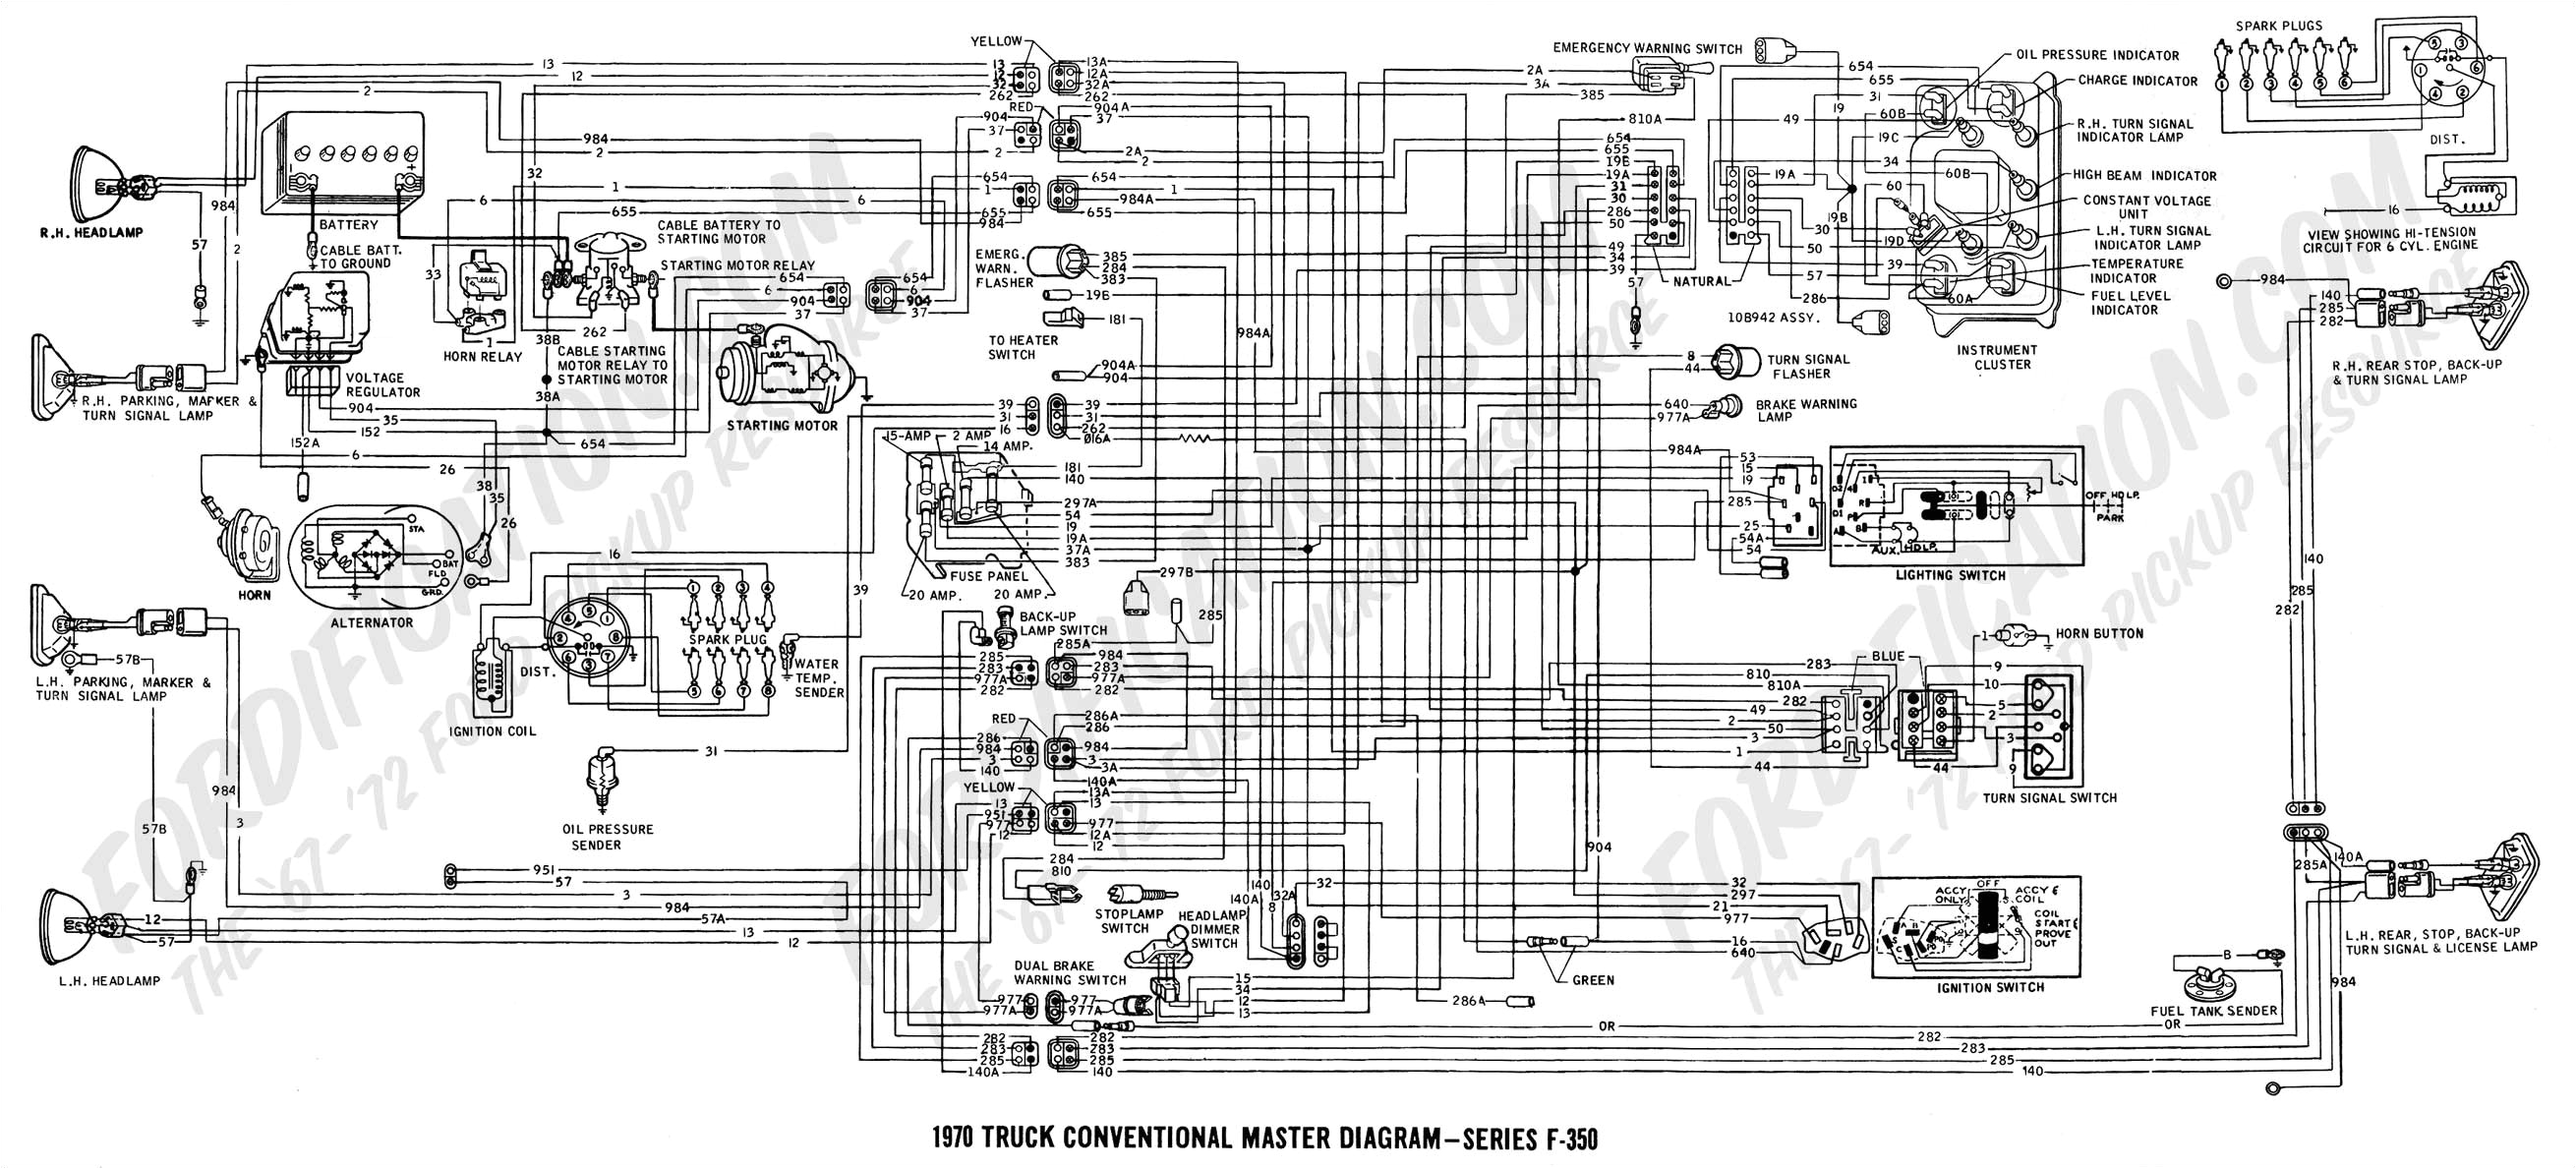 2010 ford e 450 6 0l engine diagram wiring diagram mega 2010 ford e 450 6 0l engine diagram